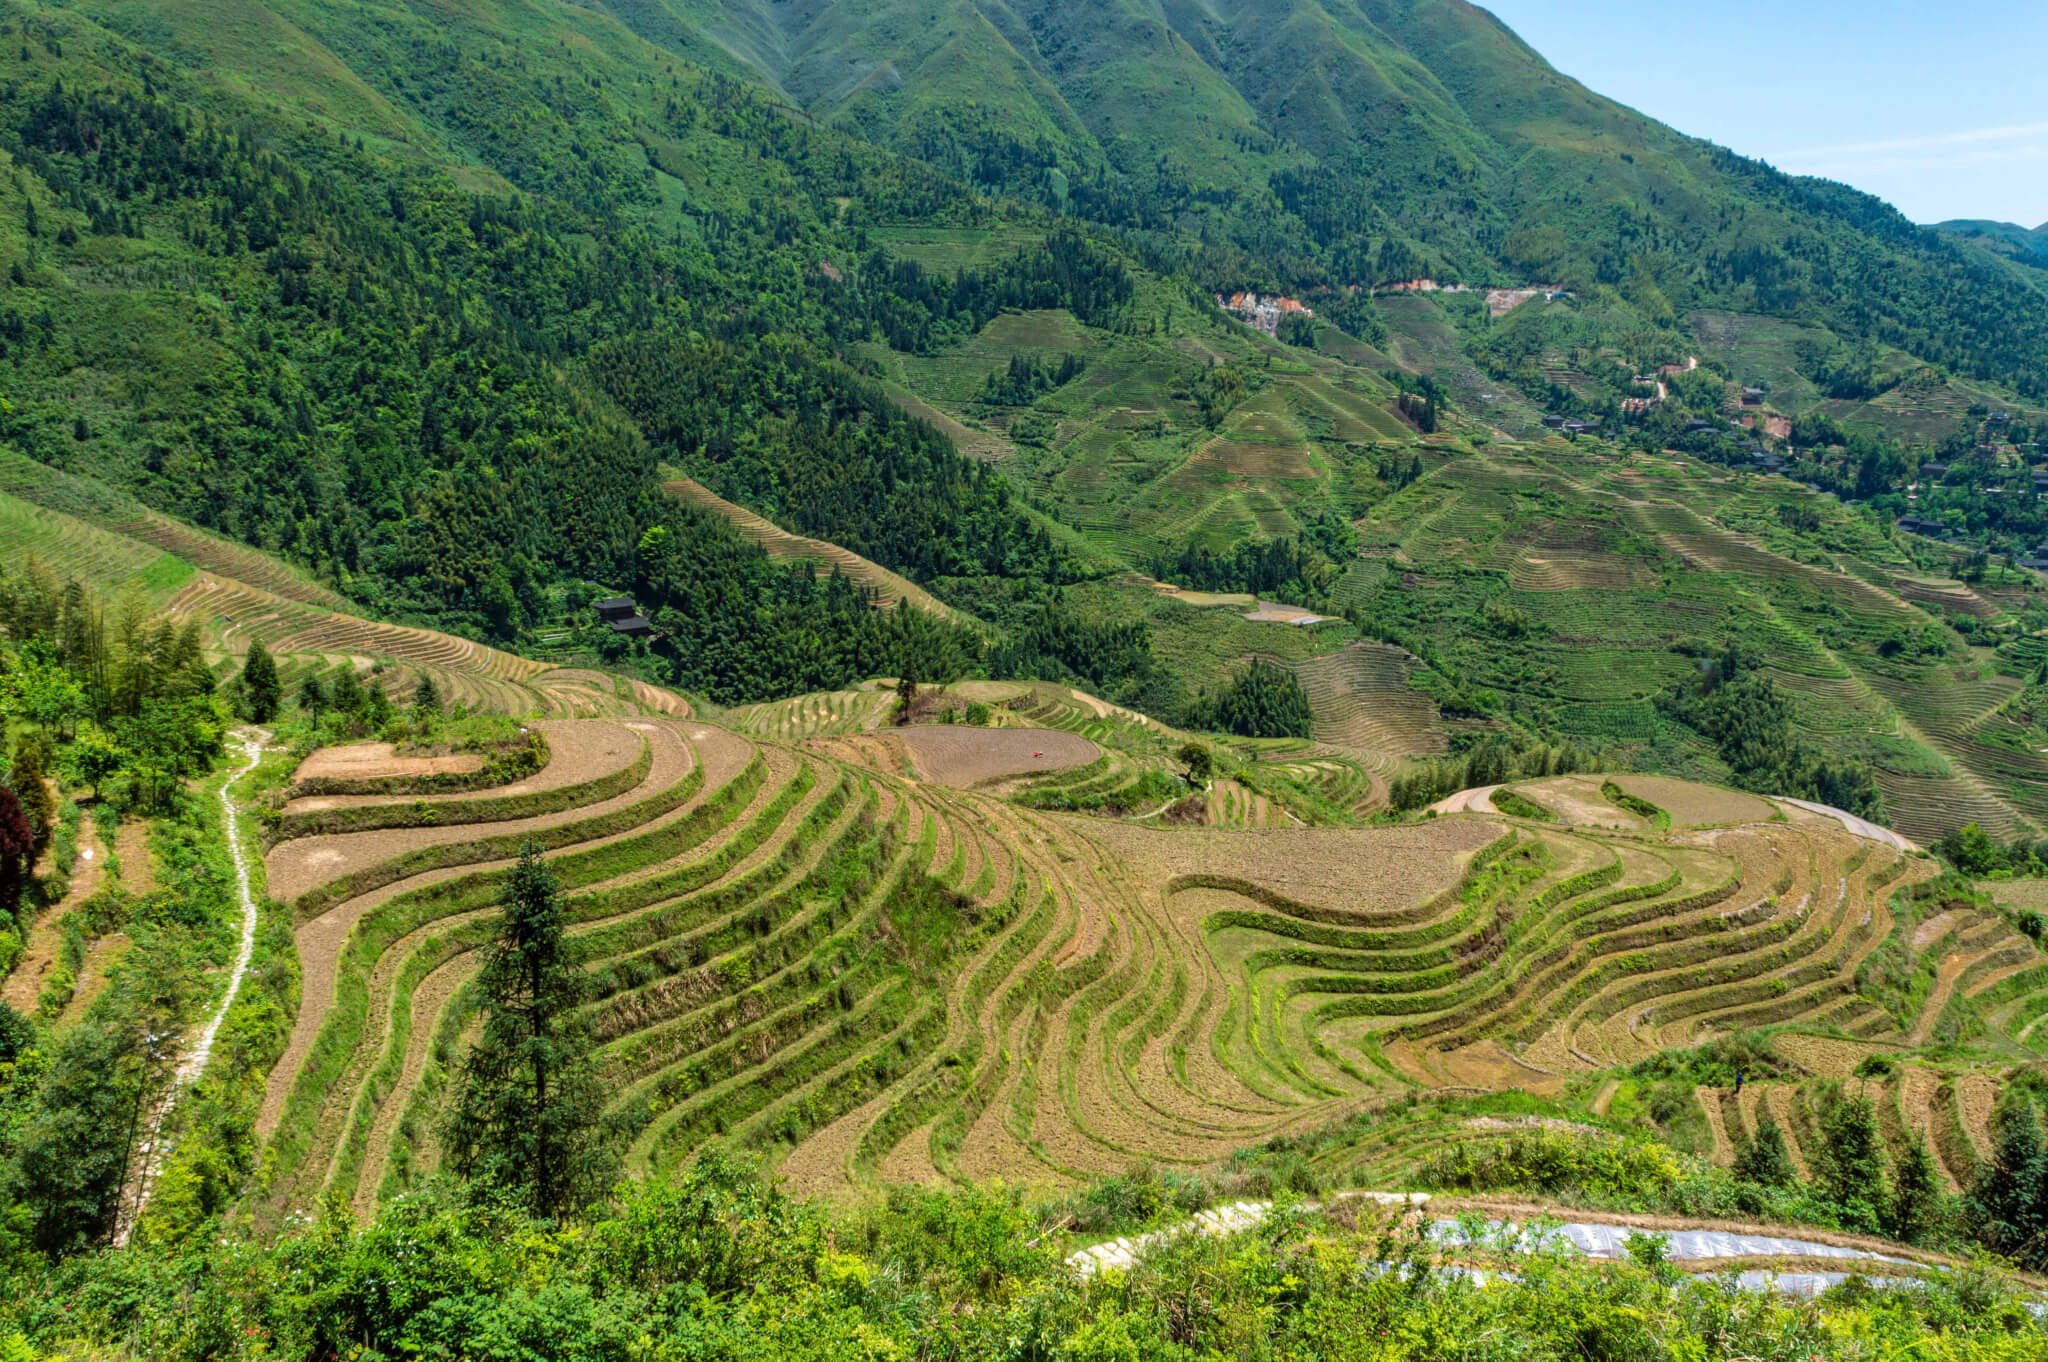 Visiting Longsheng Rice Terraces in China 2 week itinerary